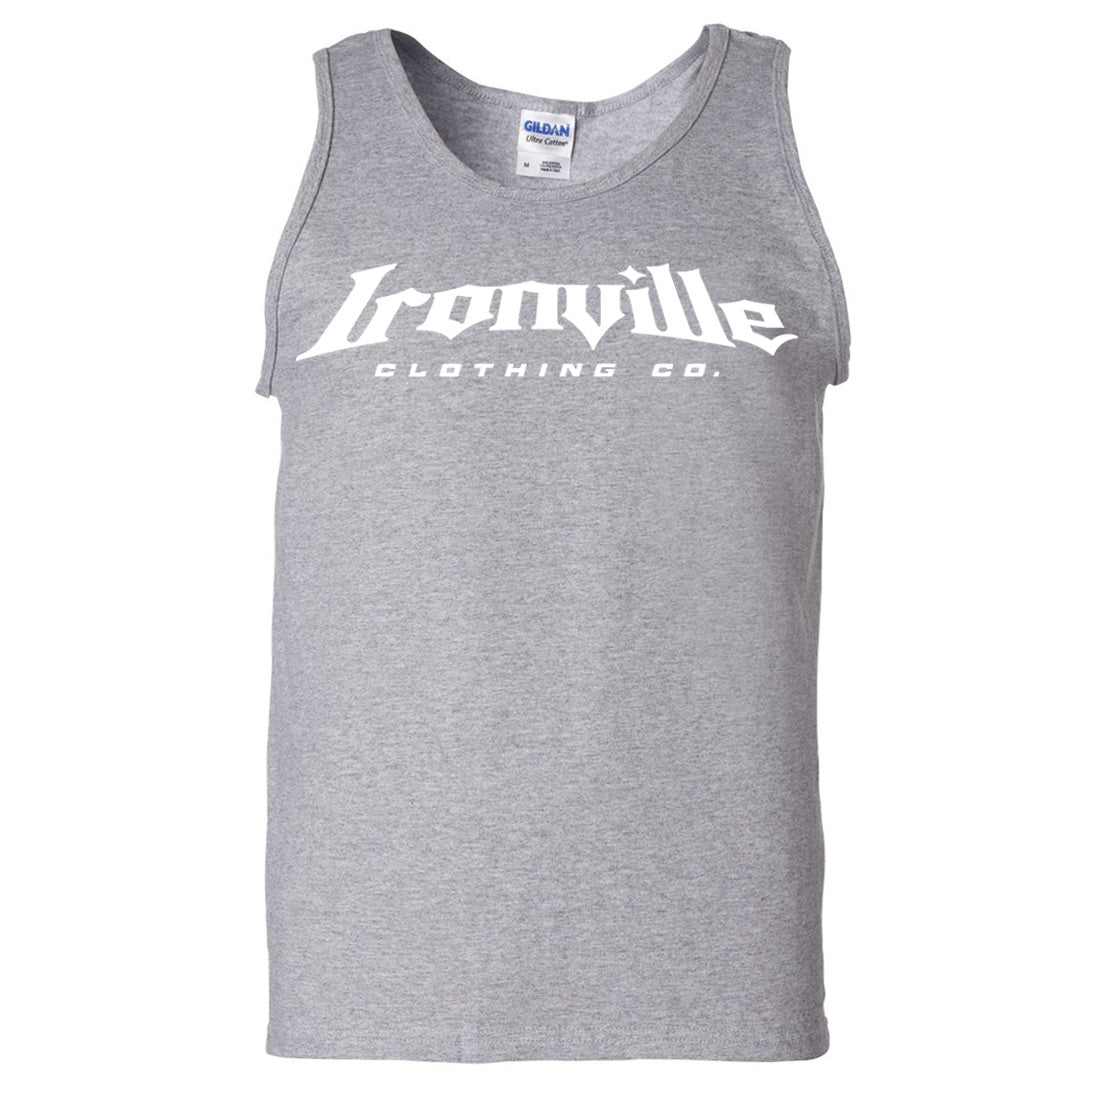 Ironville DON'T DIE Standard Cut Gym Tank Top